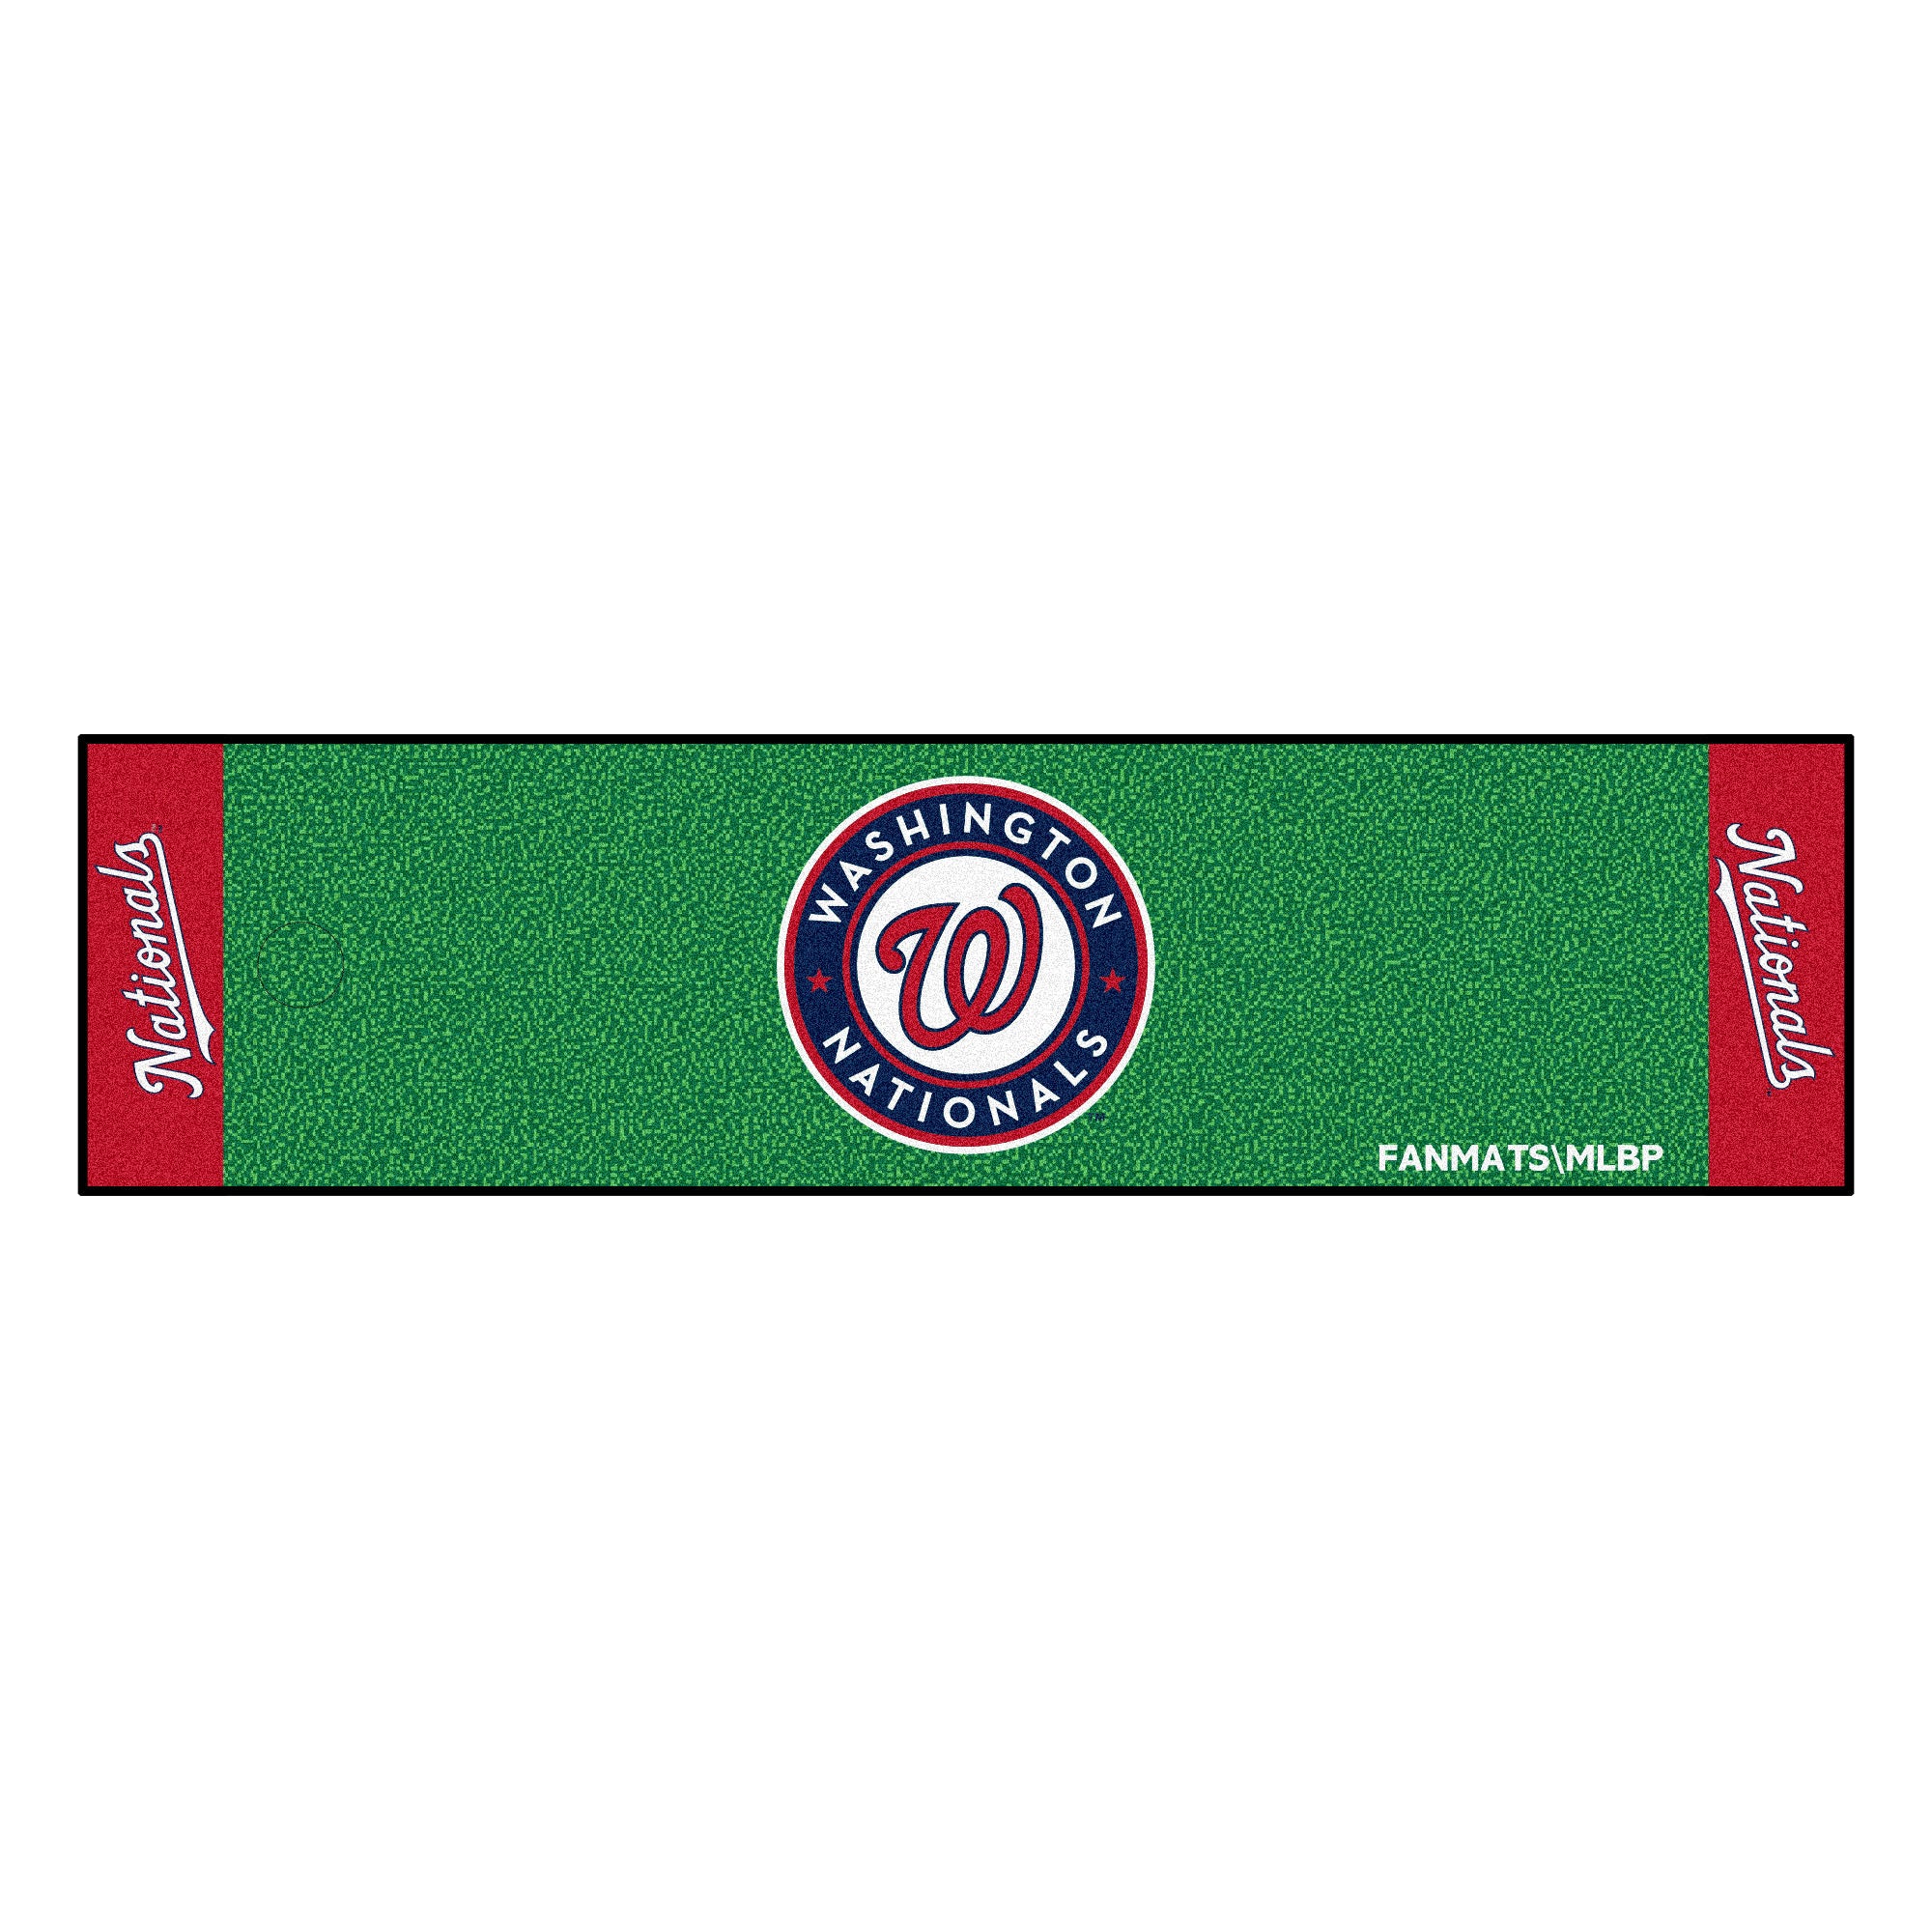 FANMATS, MLB - Washington Nationals Putting Green Mat - 1.5ft. x 6ft.